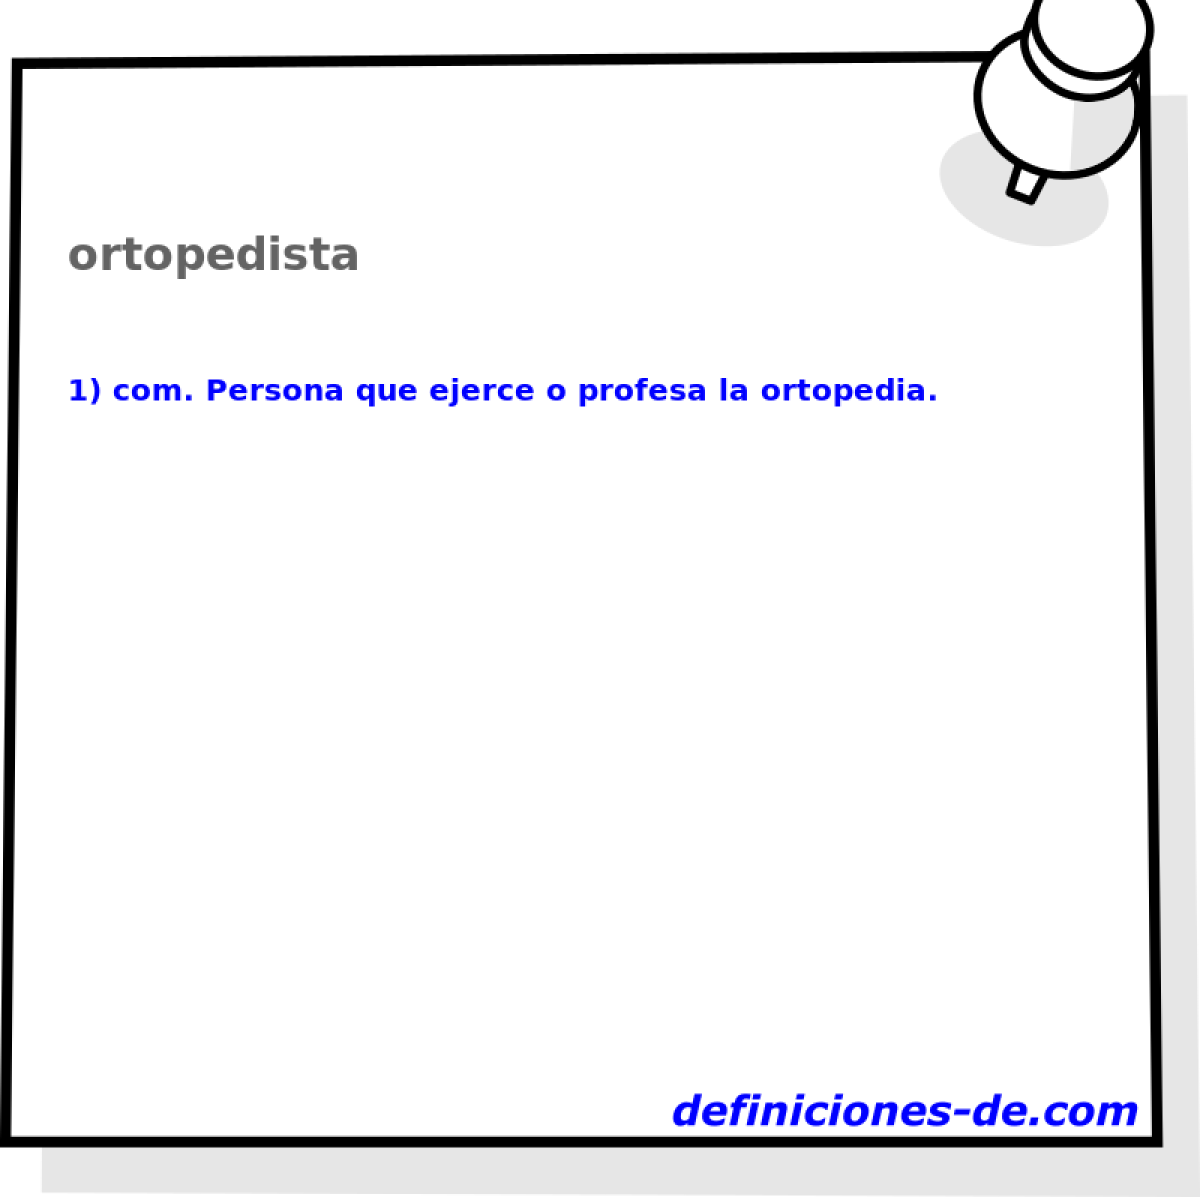 ortopedista 